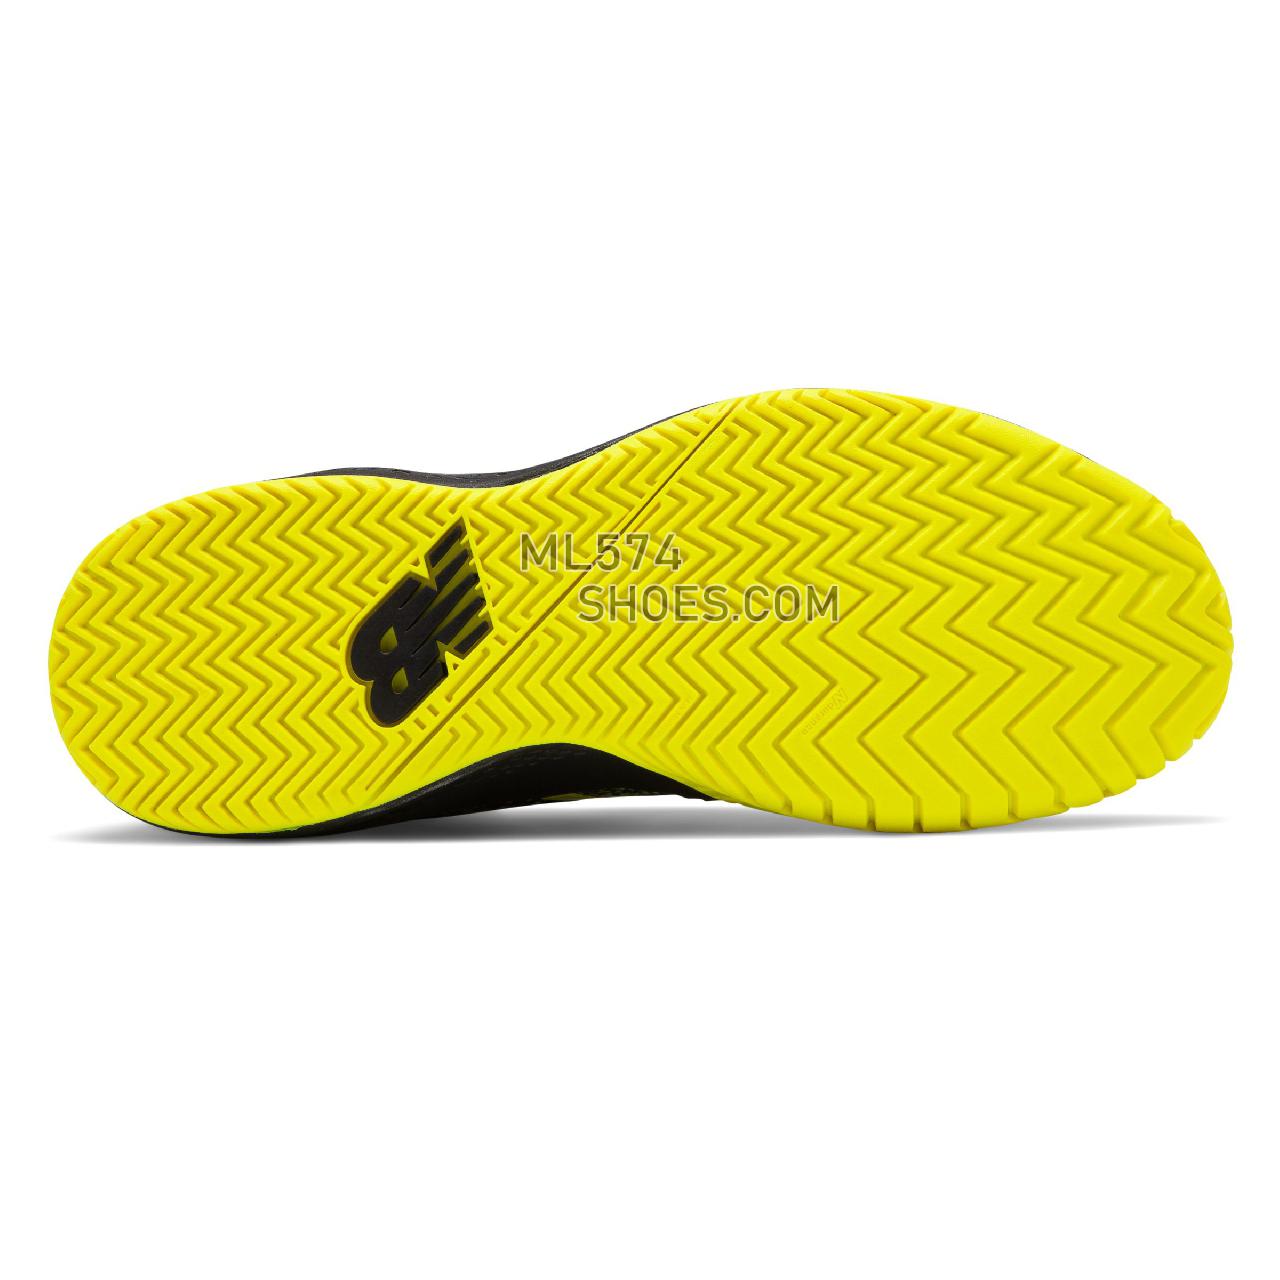 New Balance 996v3 - Men's Tennis - Black with Sulphur Yellow - MCH996S3